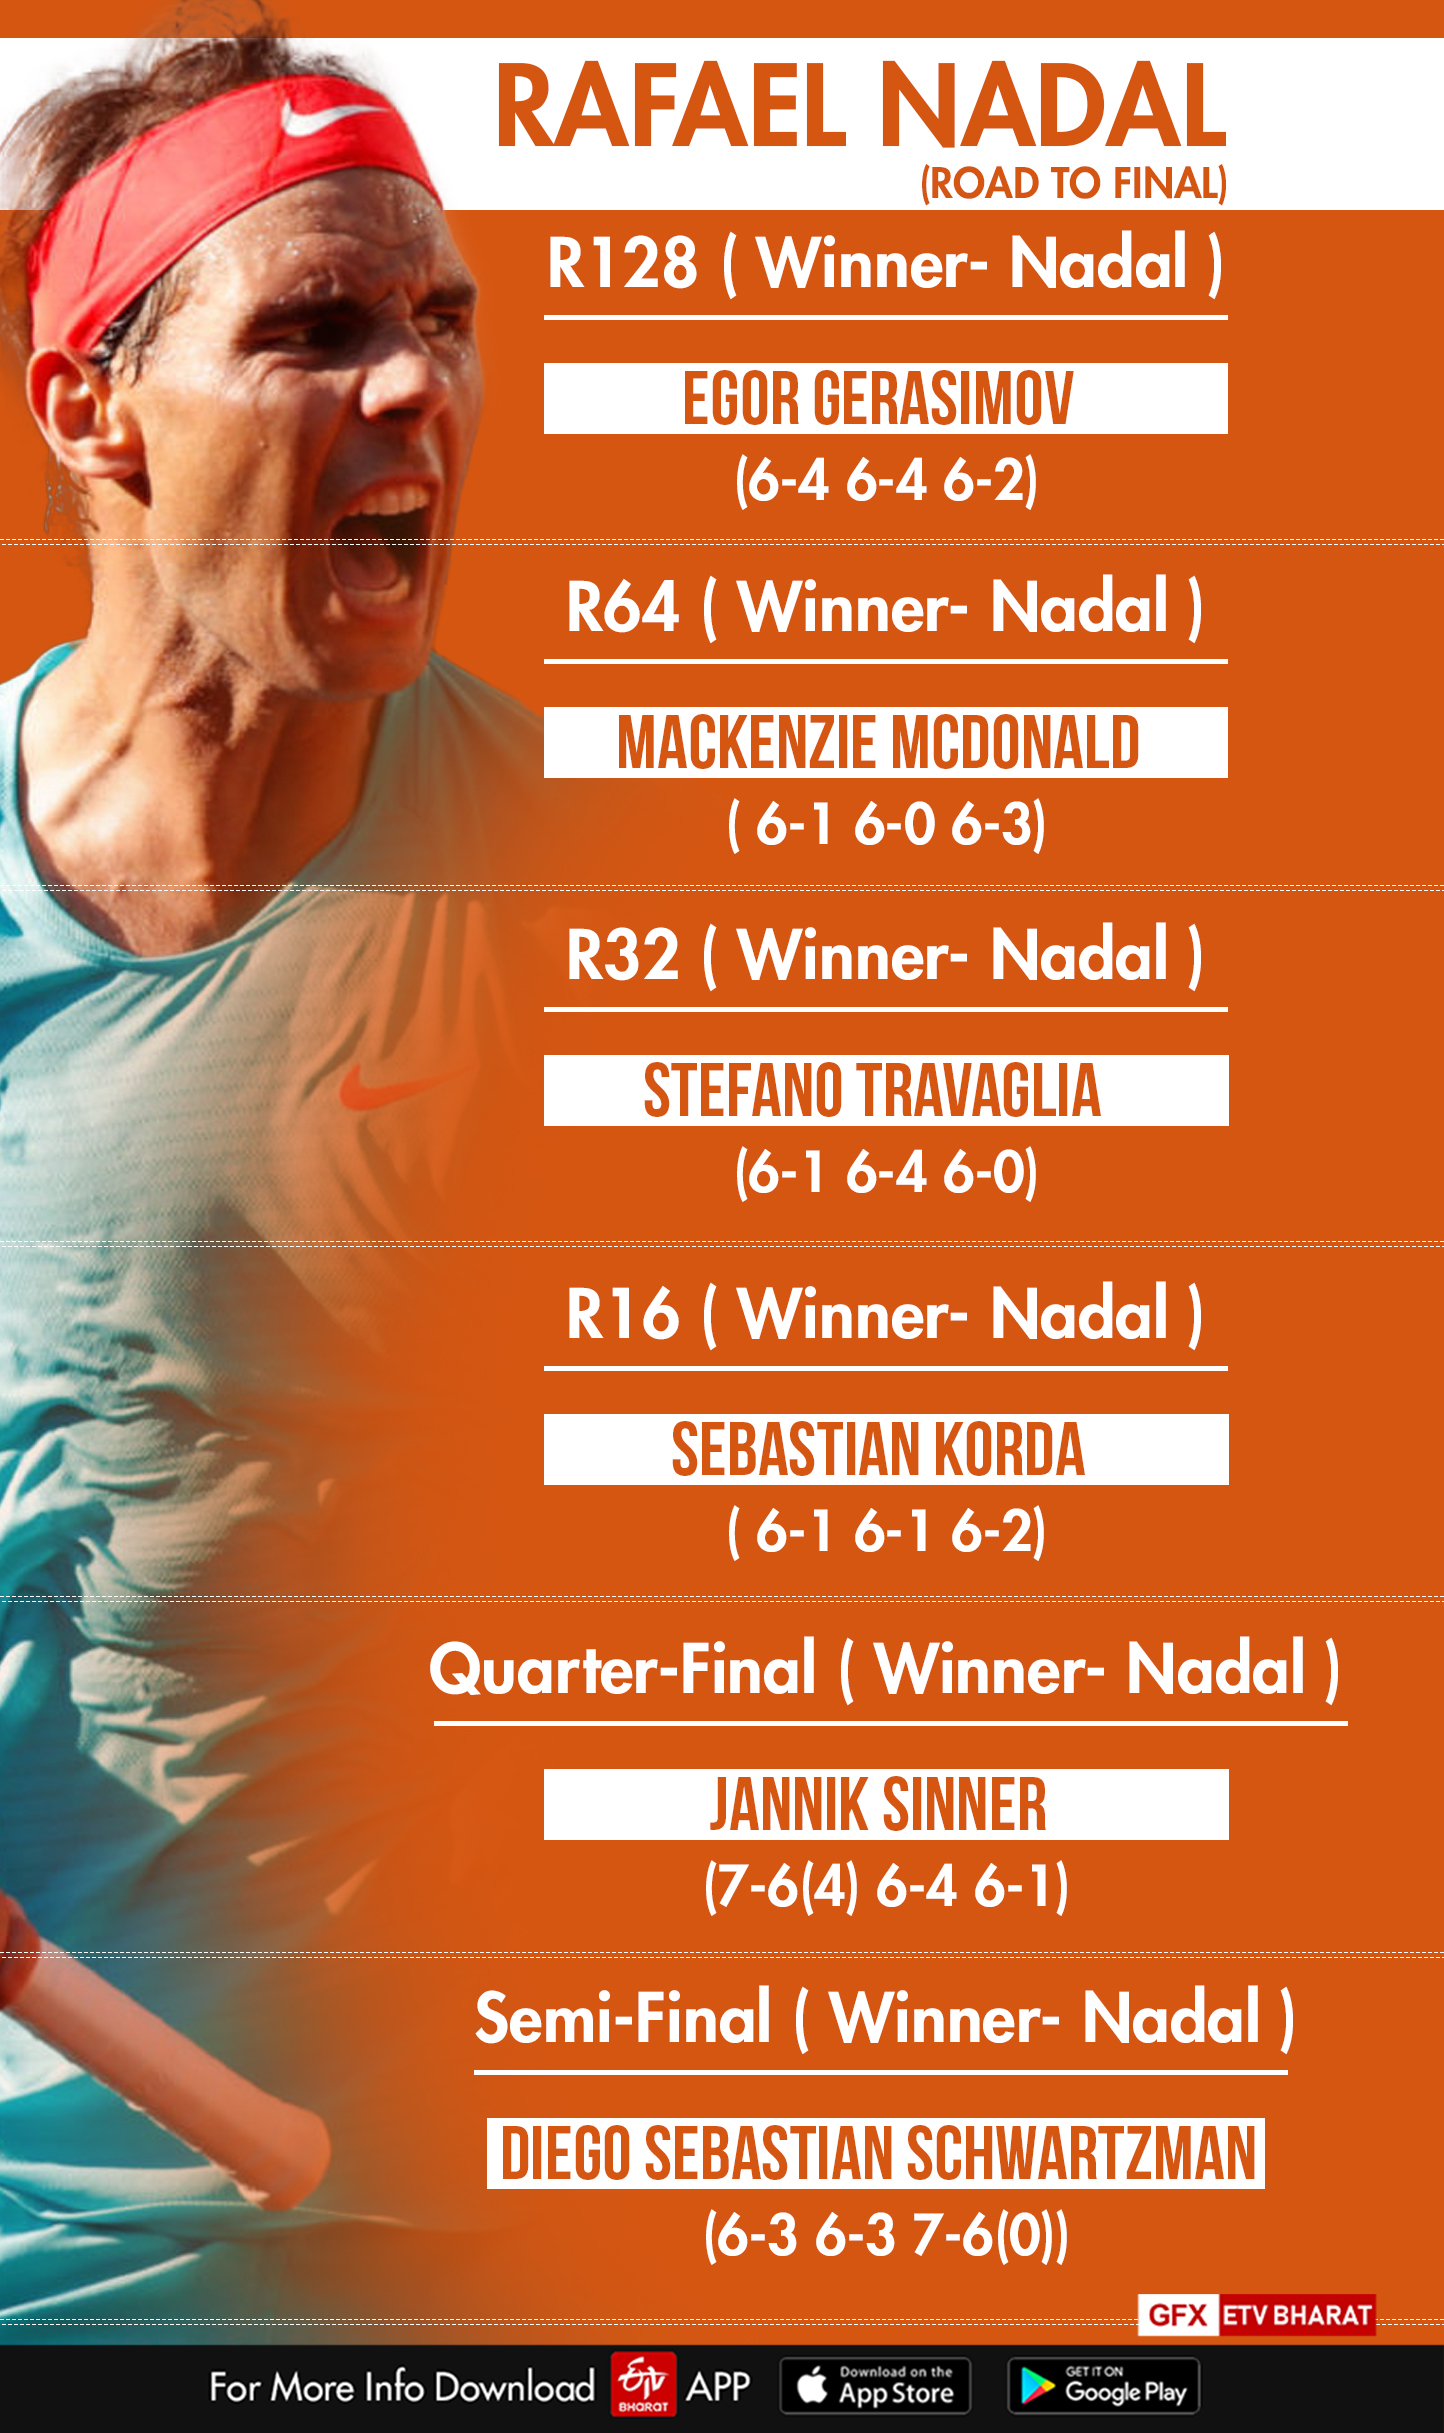 'It's his house': Nadal vs Djokovic in French Open final